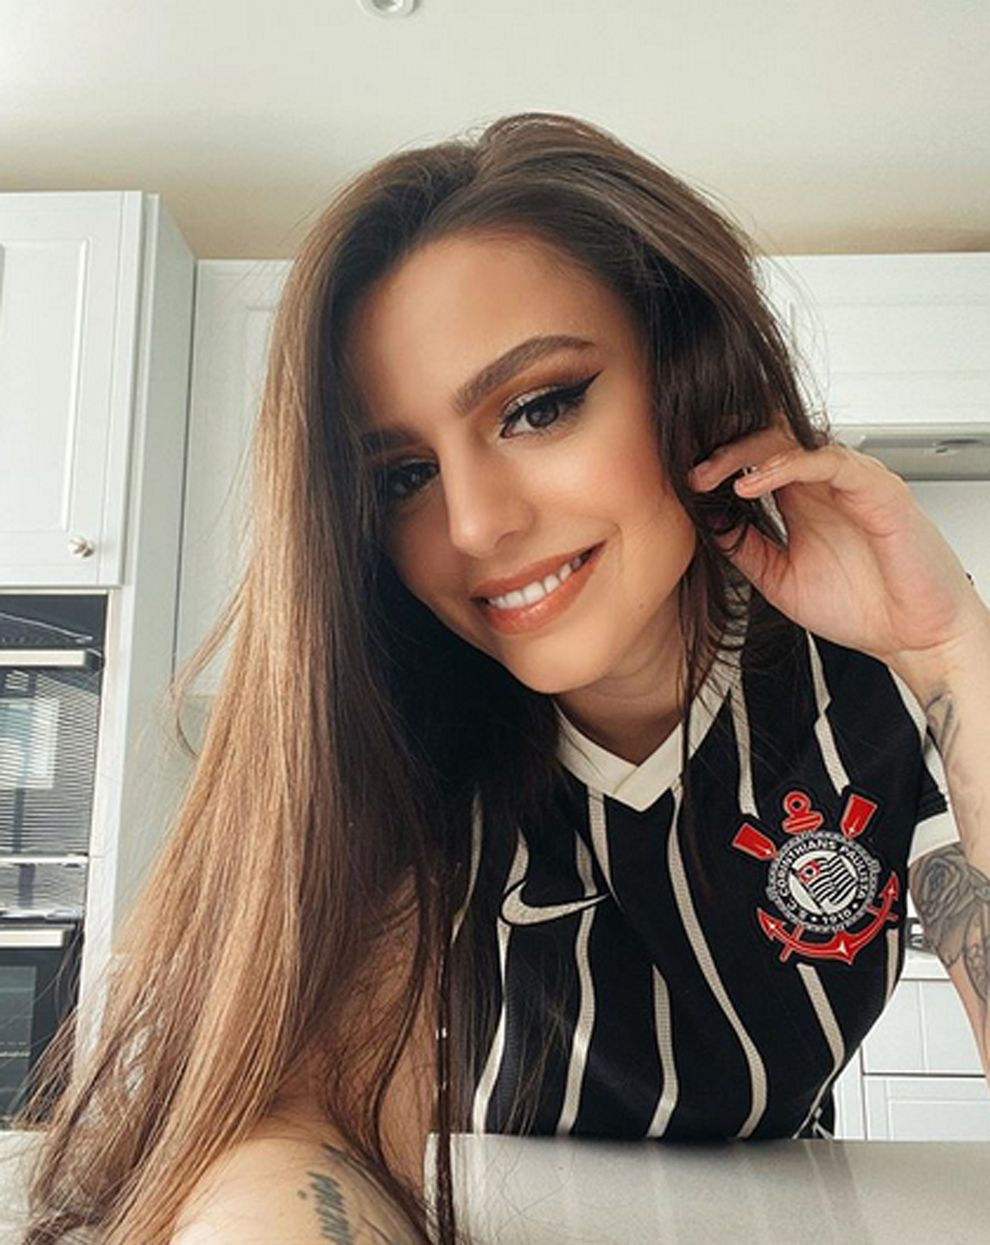 Cher Lloyd wore a Corinthians shirt for her latest post.